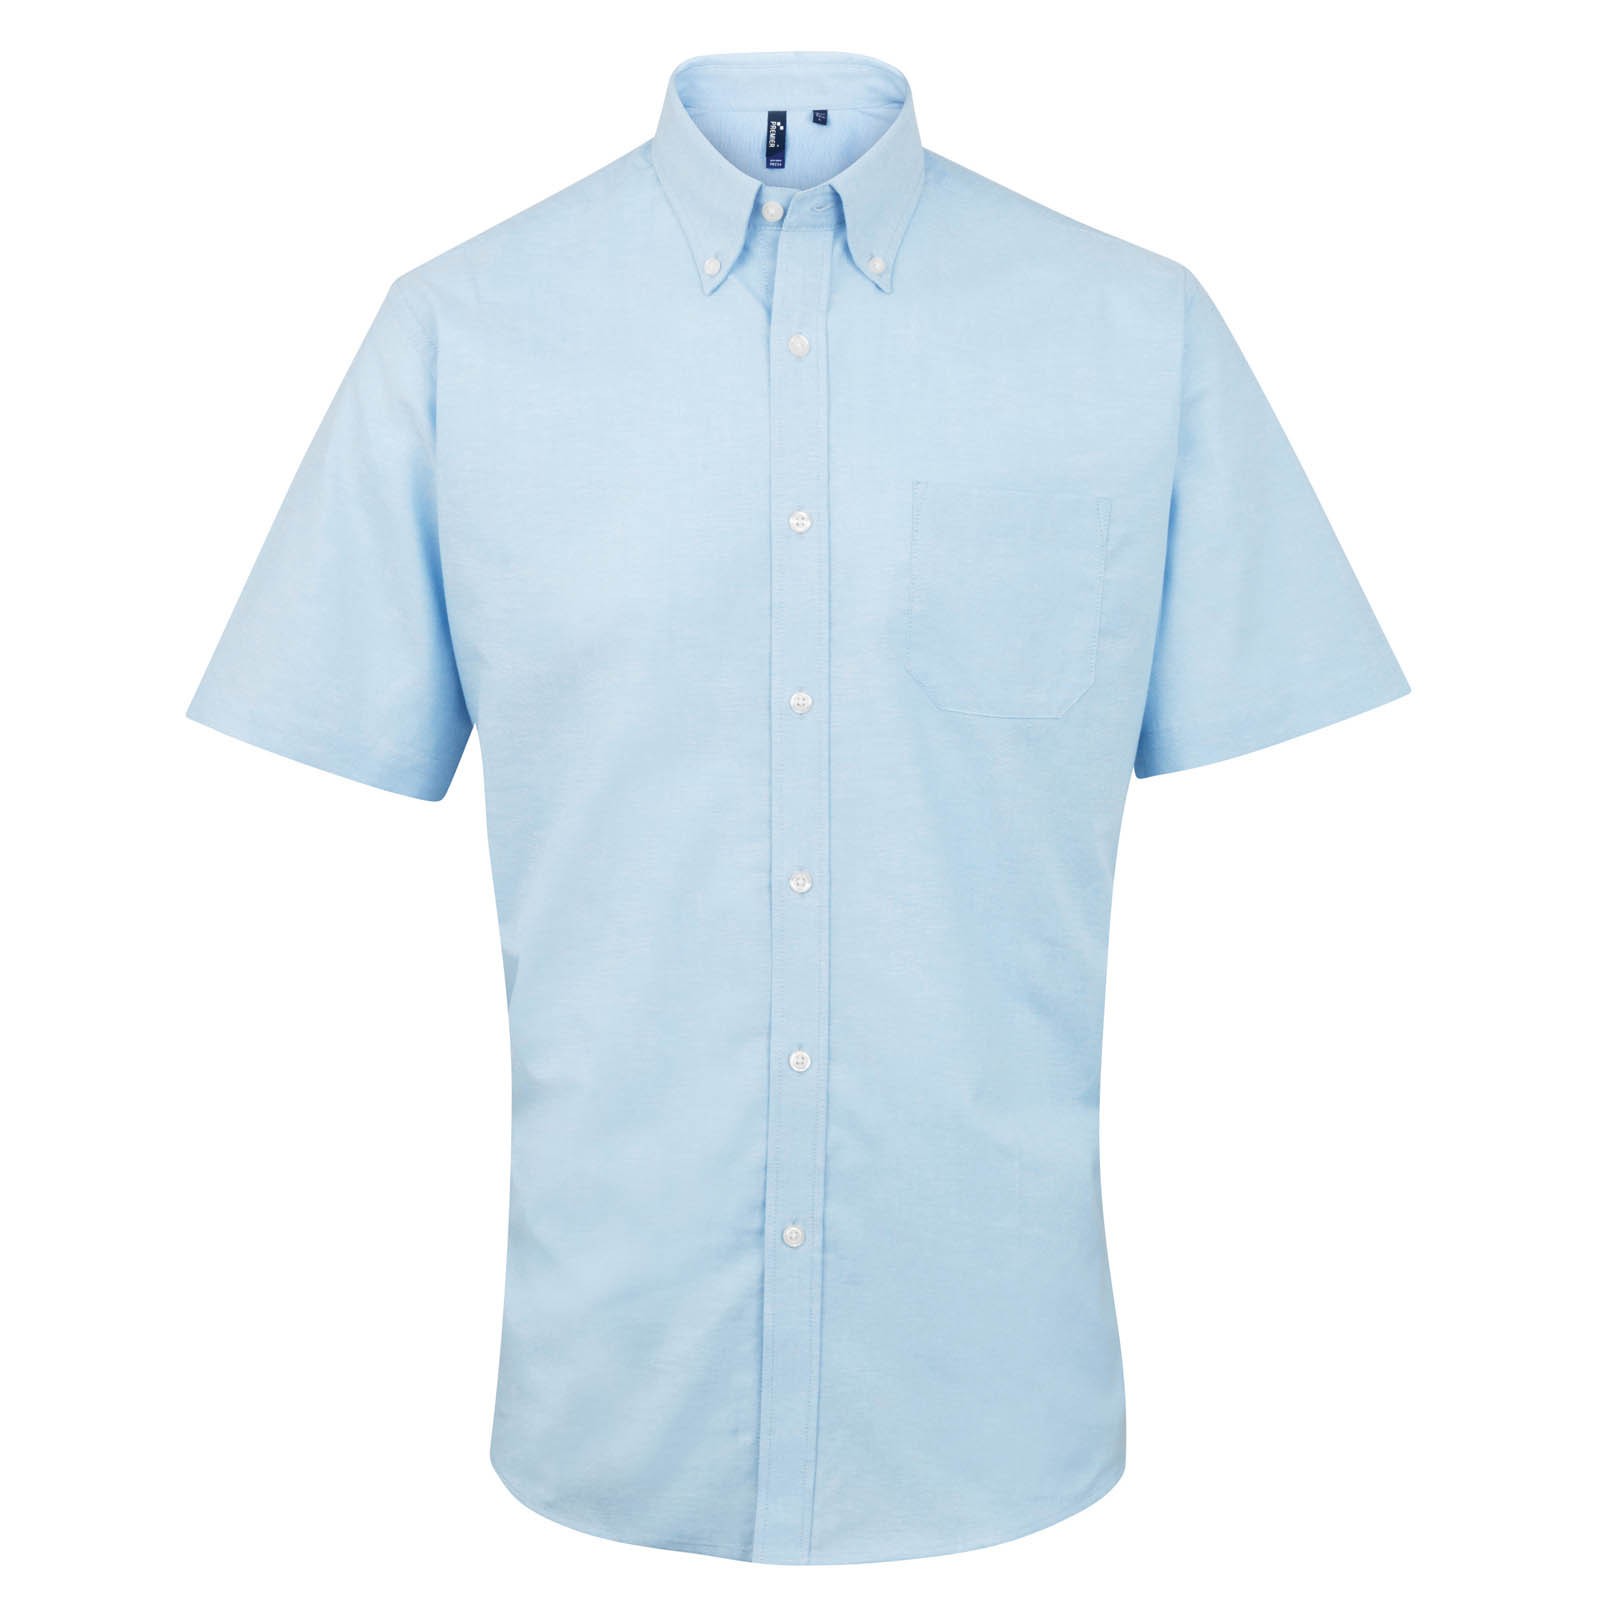 Premier Signature Short Sleeve Oxford Shirt - Short Sleeve Oxford Shirts - Oxford  Shirts - Shirts - Leisurewear - Best Workwear